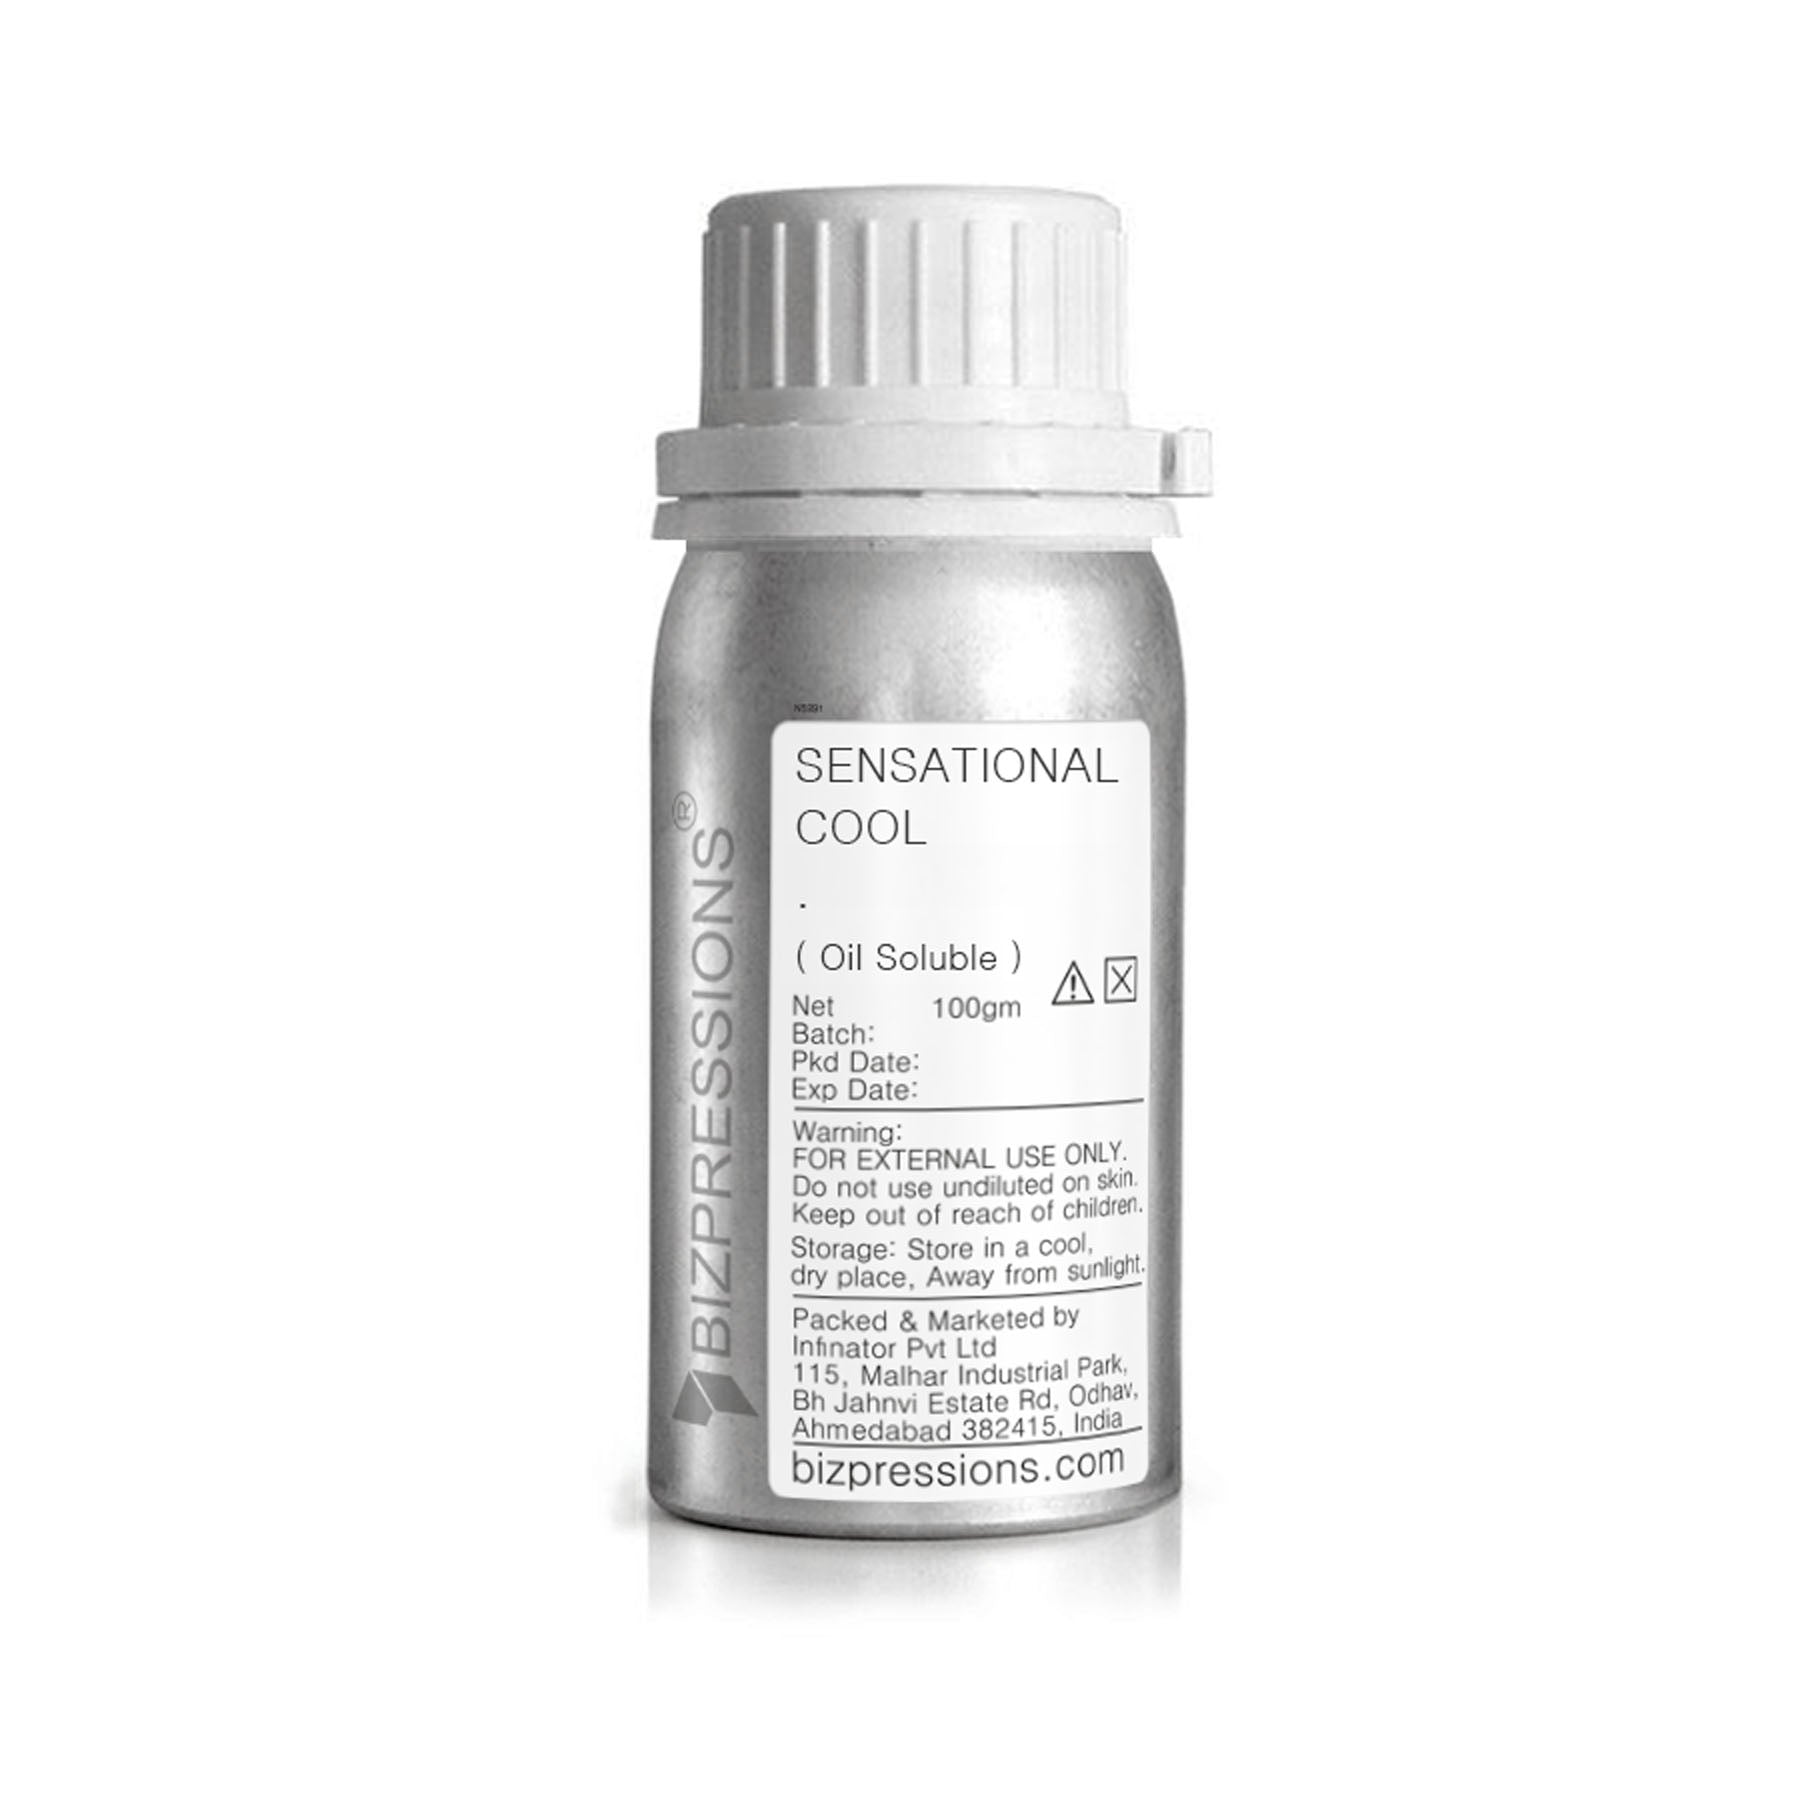 SENSATIONAL COOL - Fragrance ( Oil Soluble ) - 100 gm